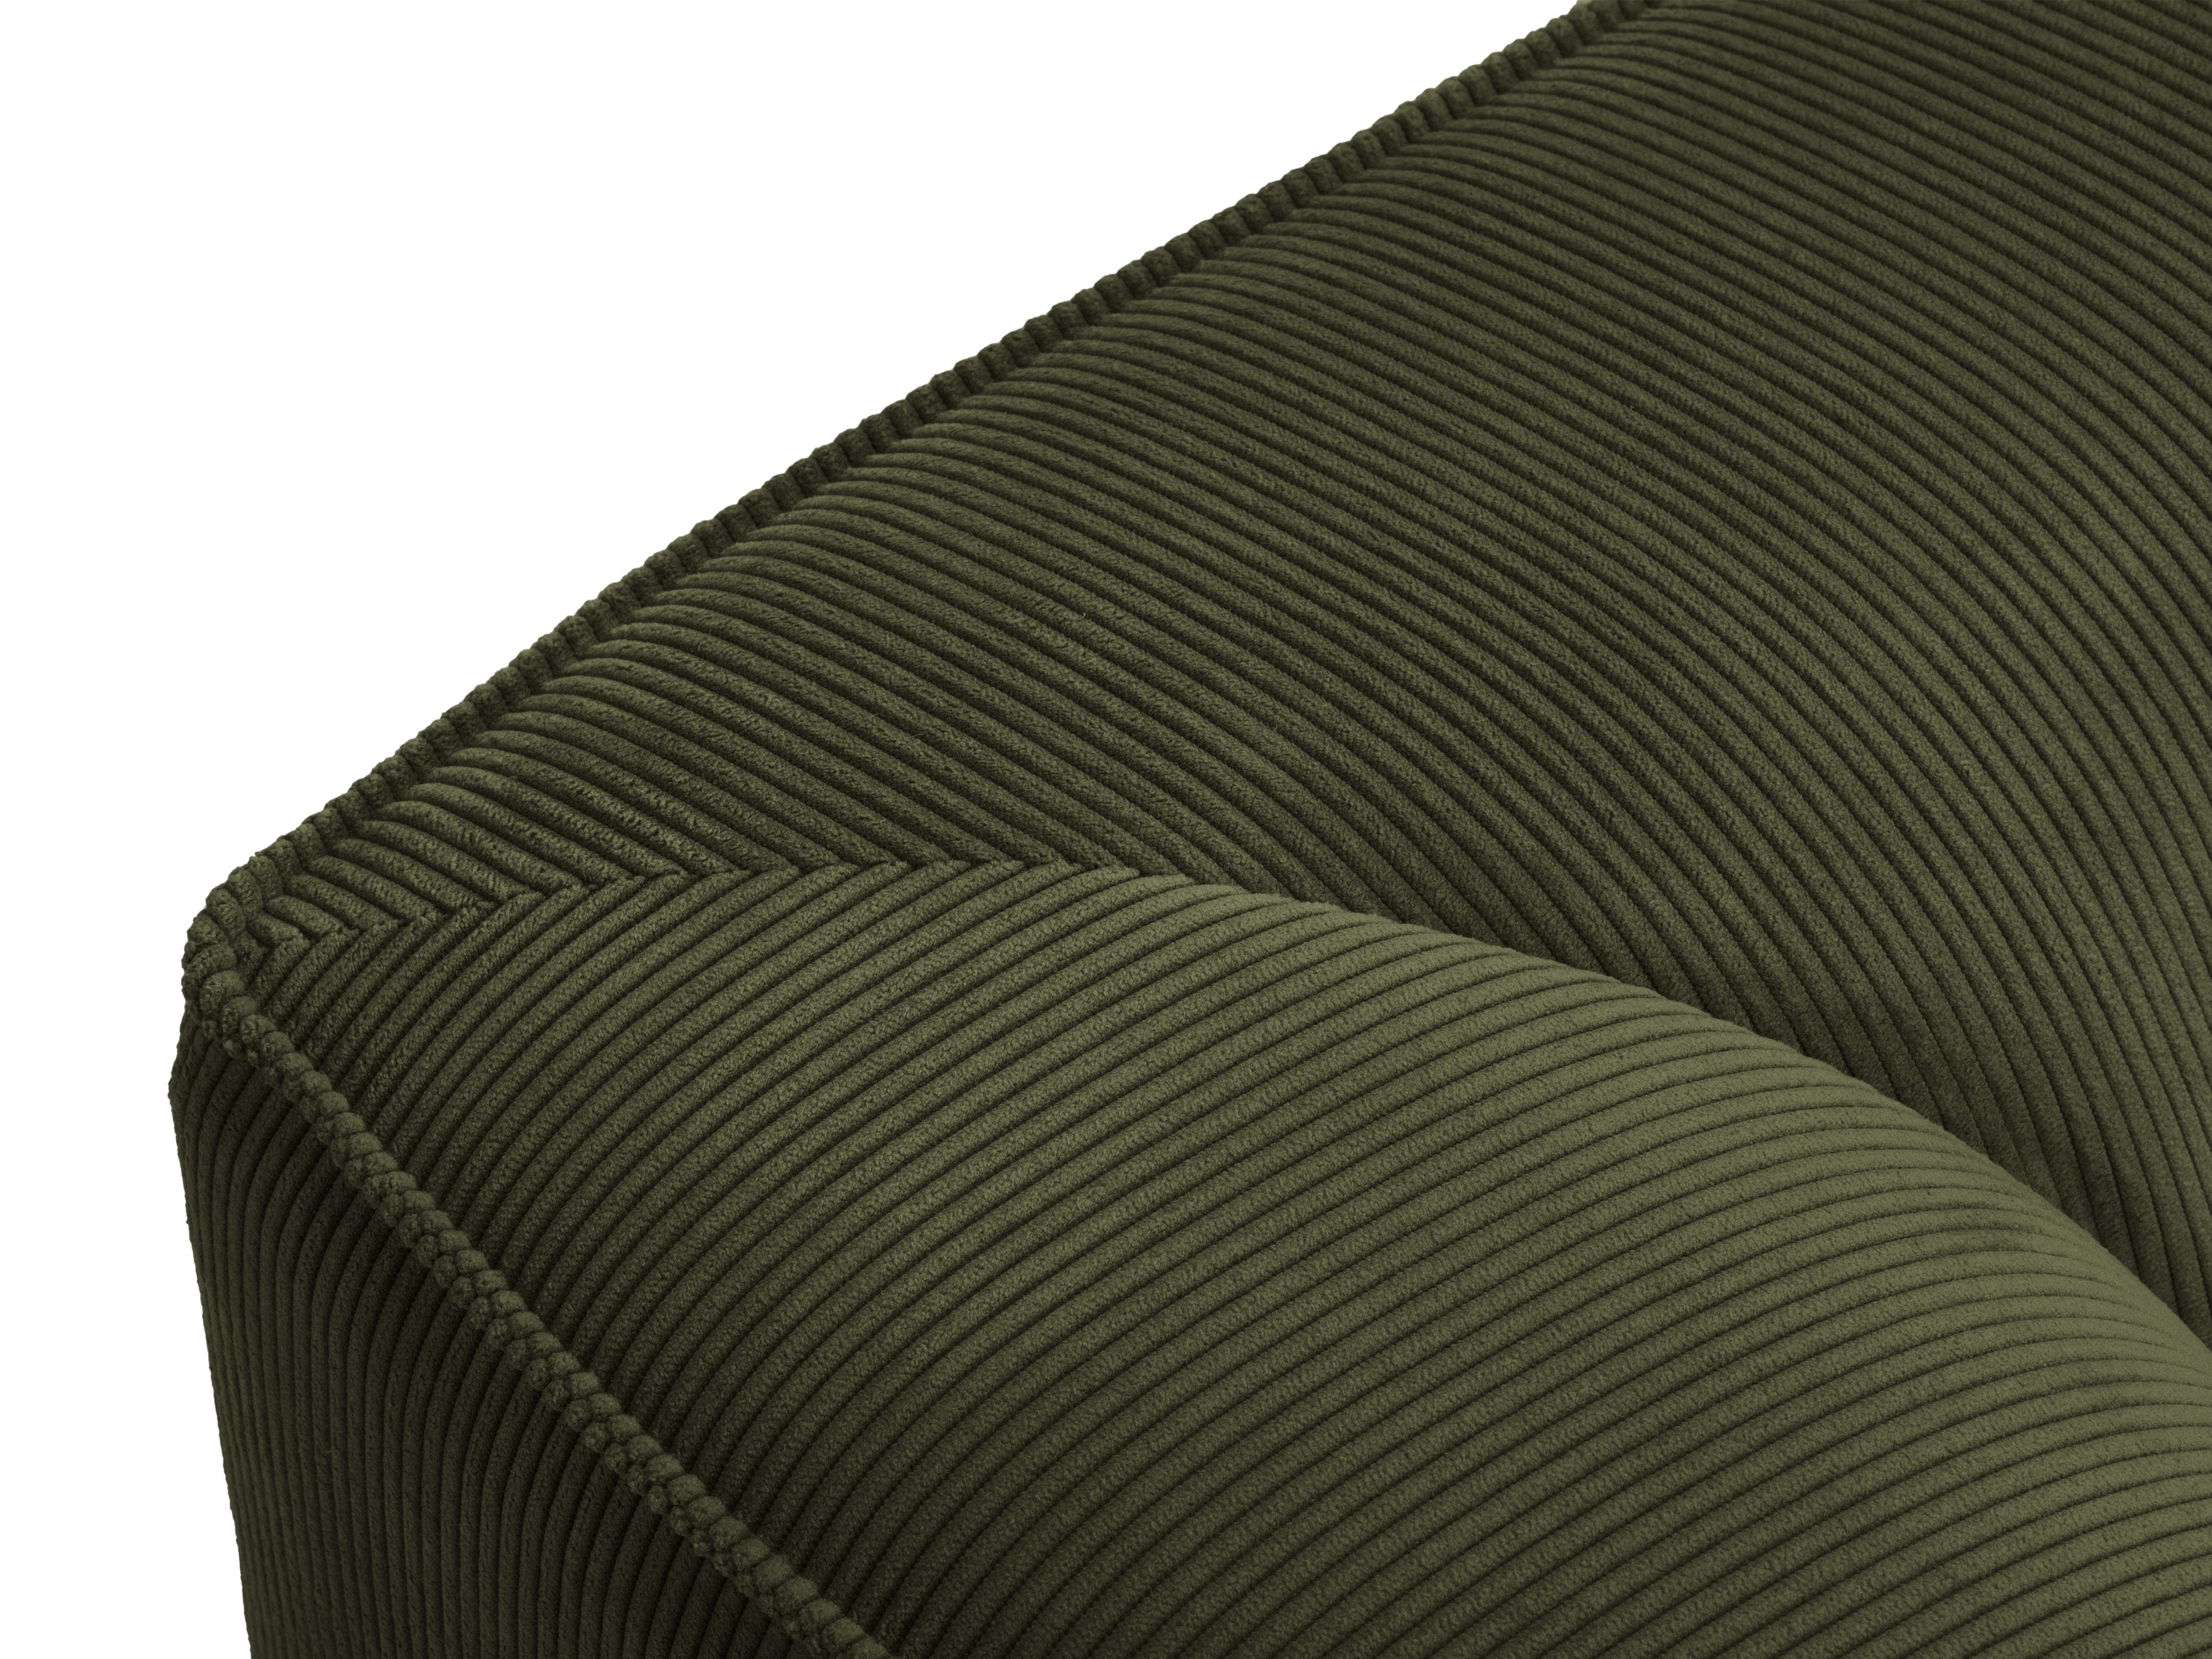 Green corduroy fabric